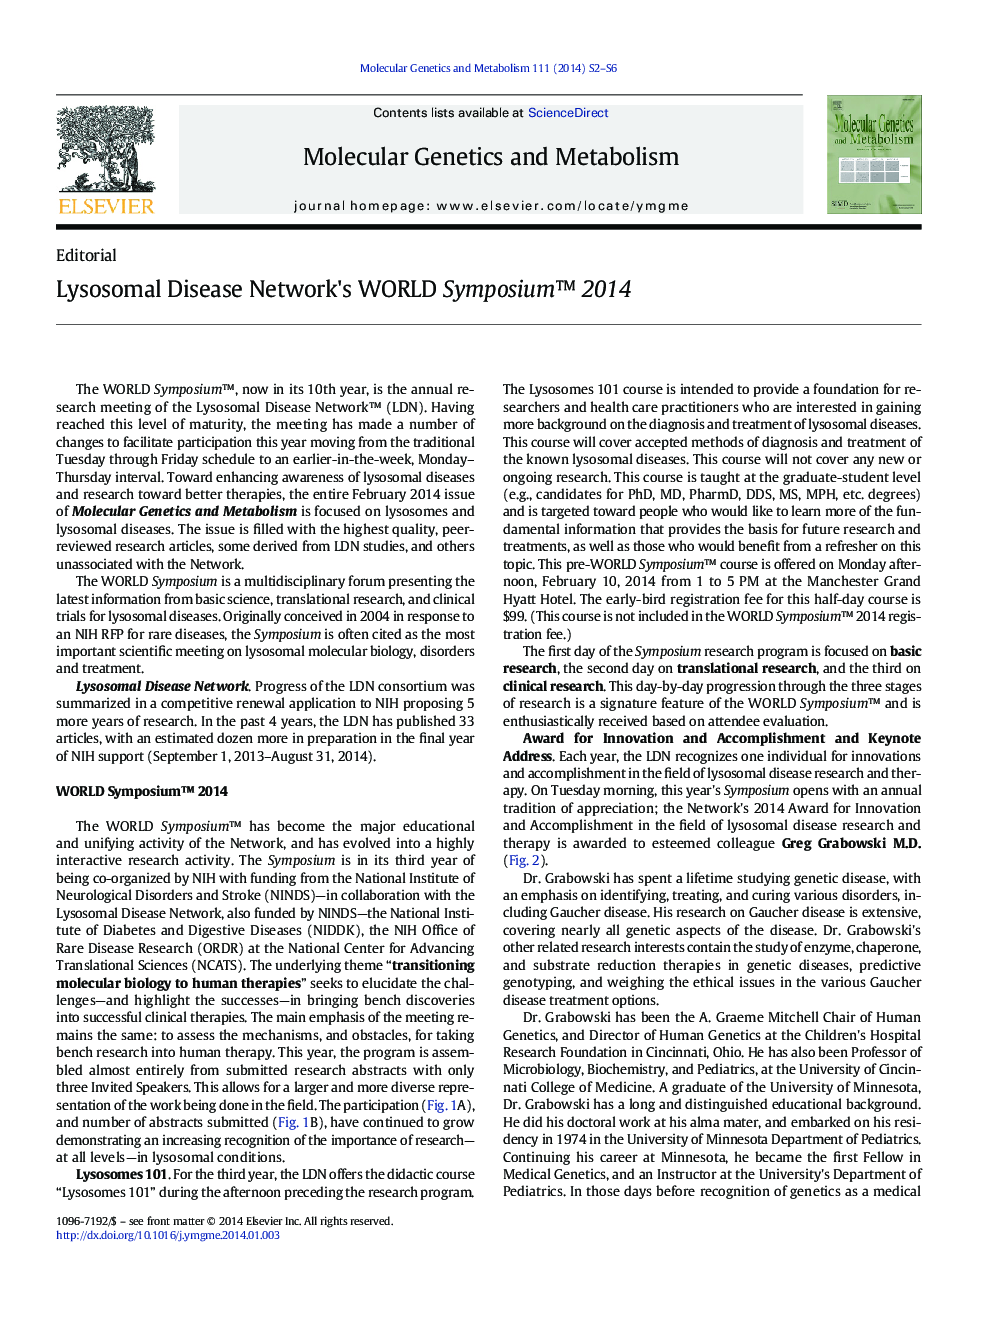 Lysosomal Disease Network's WORLD Symposiumâ¢ 2014